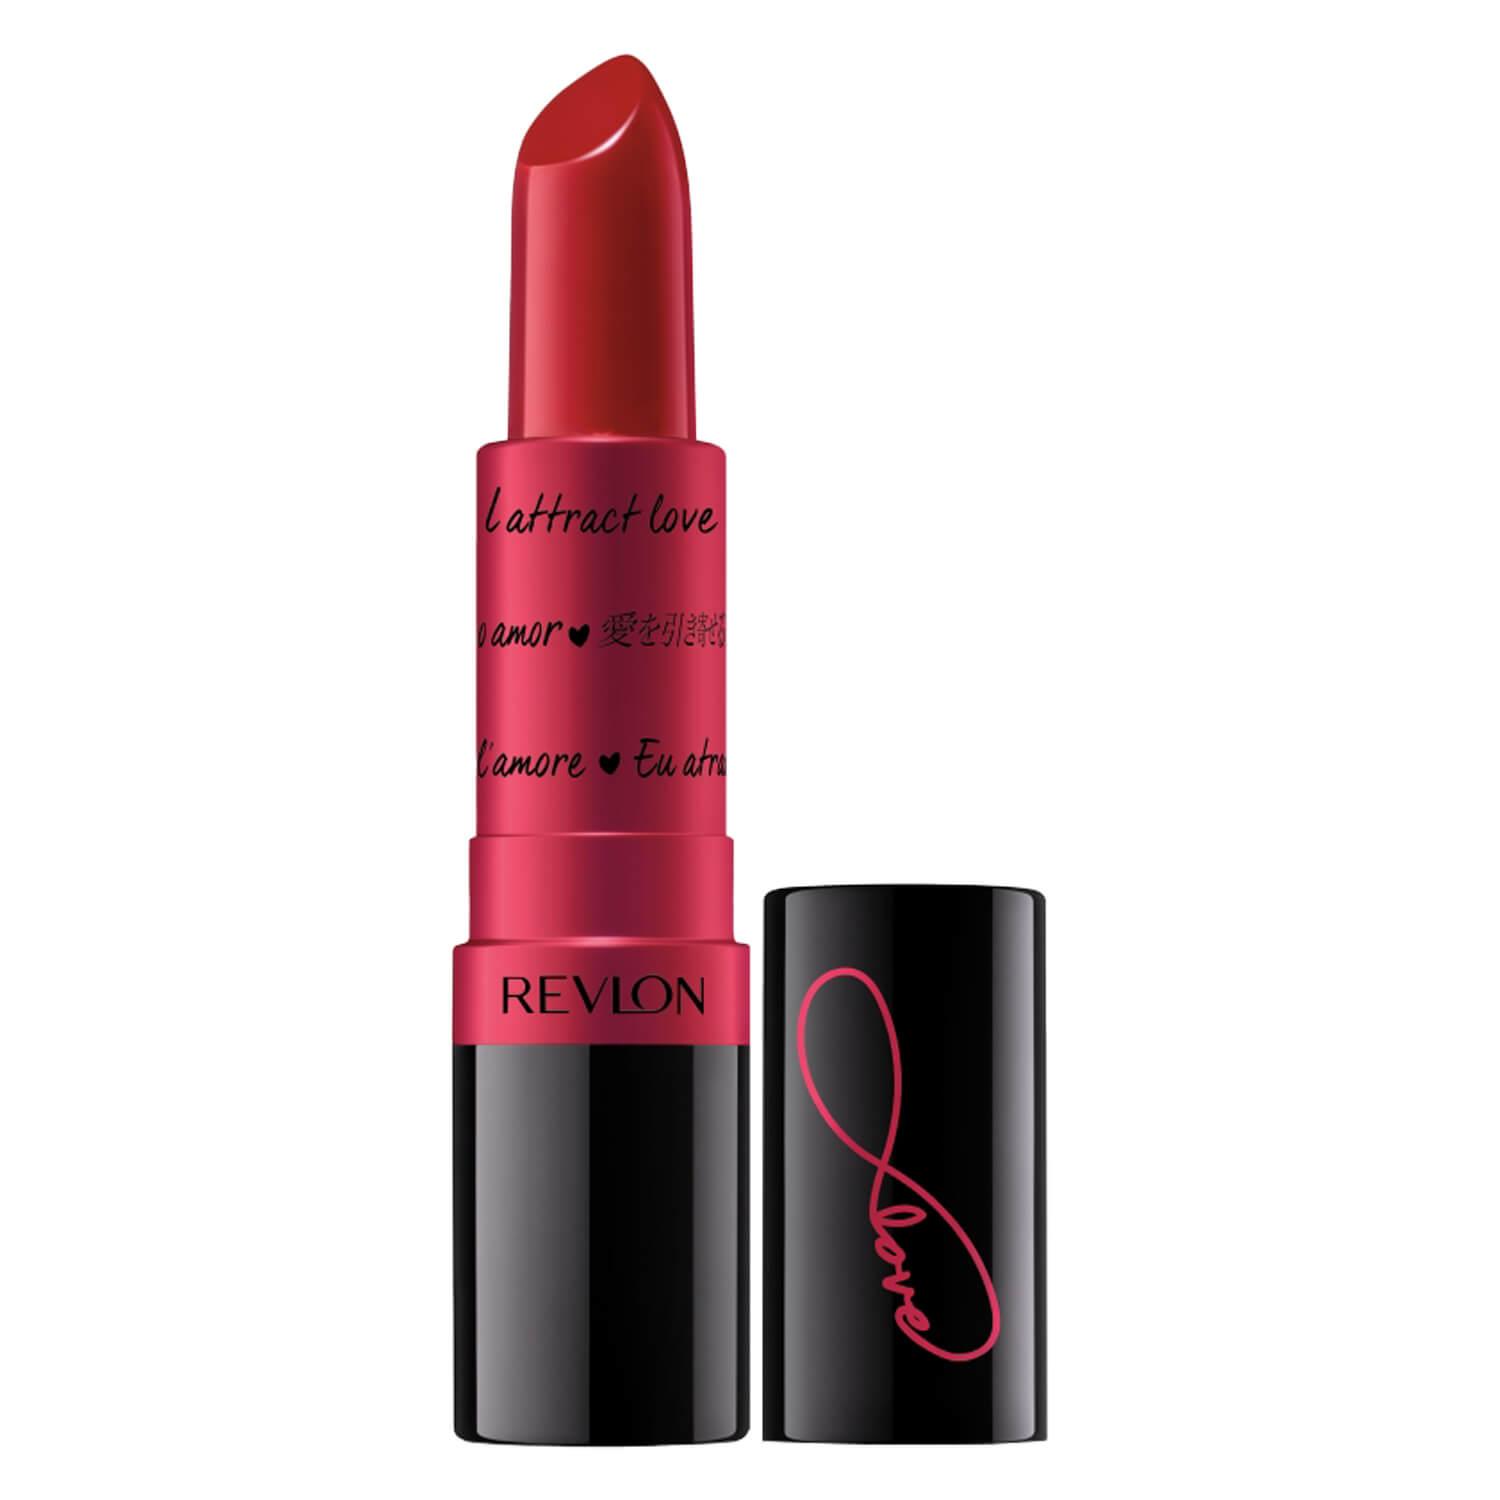 Super Lustrous Lipstick Love is on